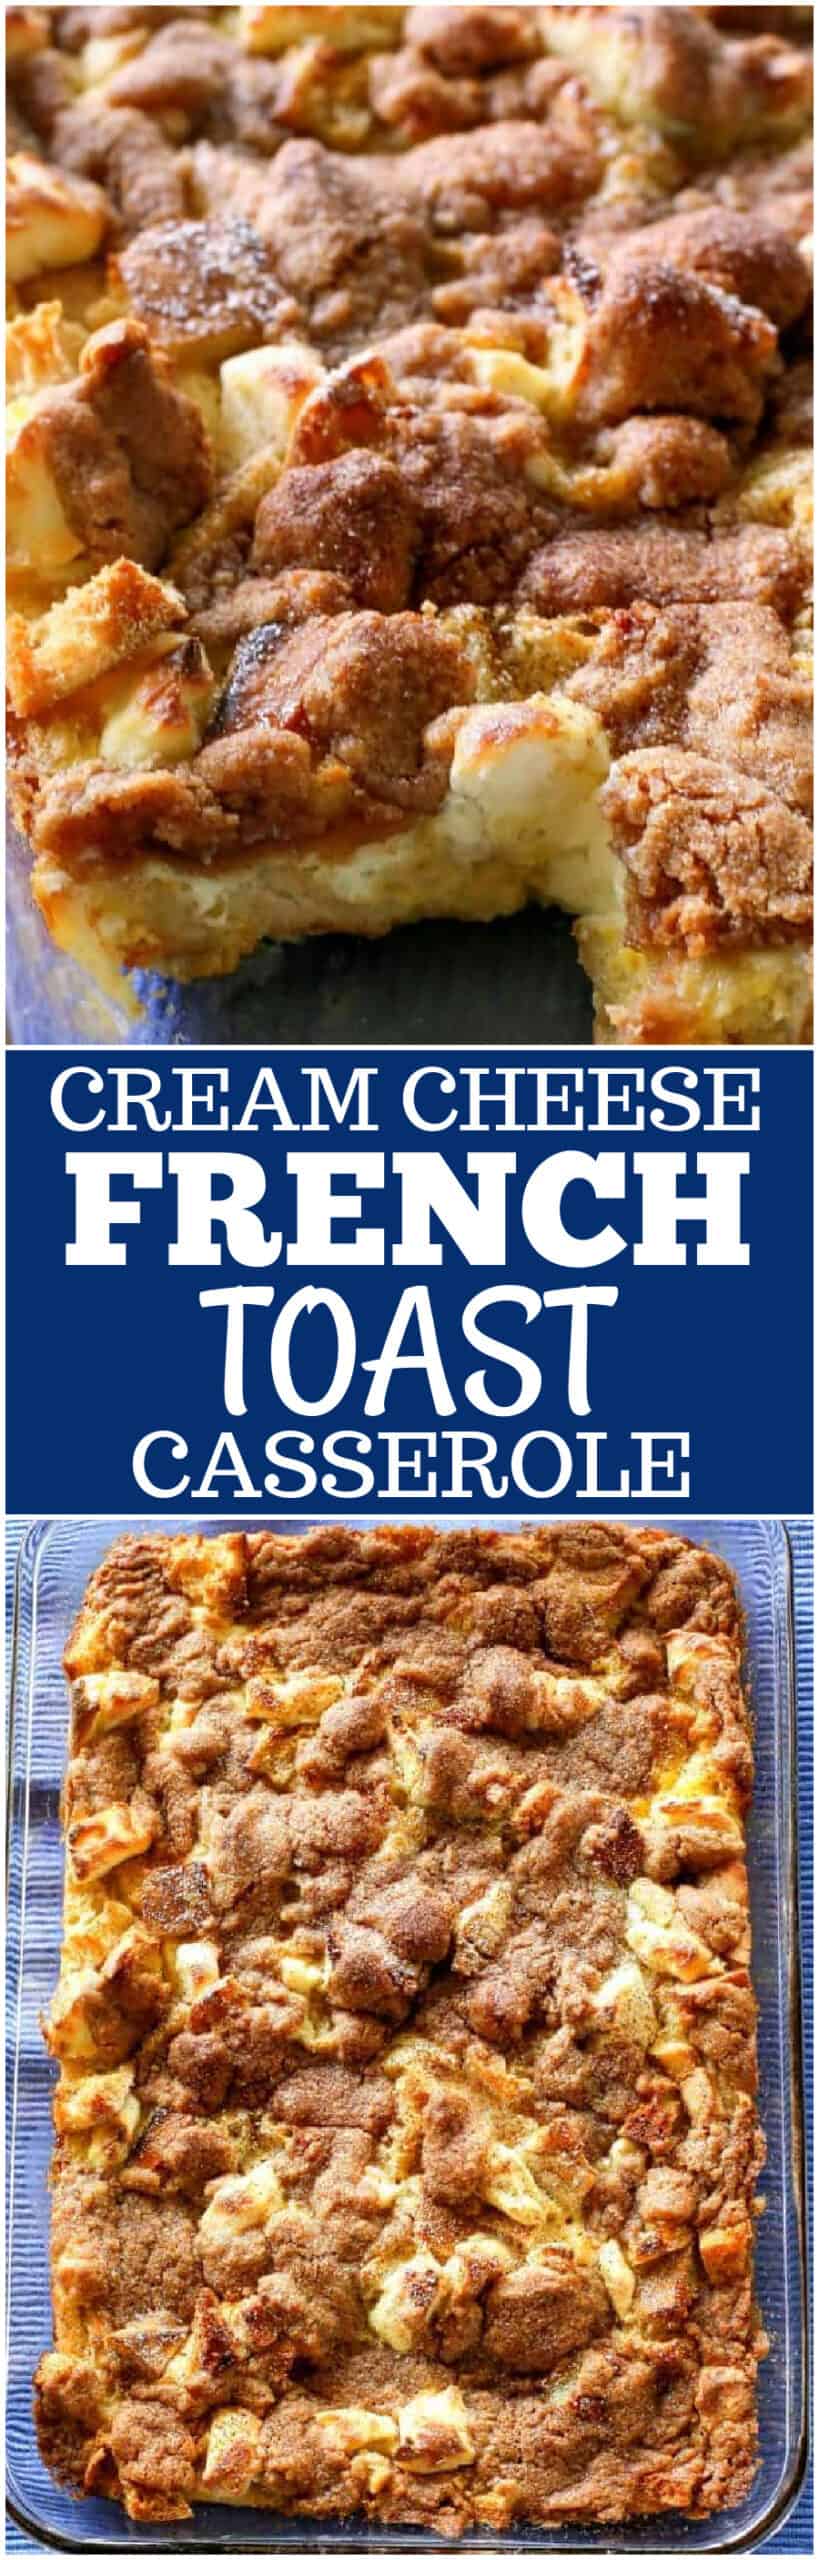 cream cheese french toast casserole